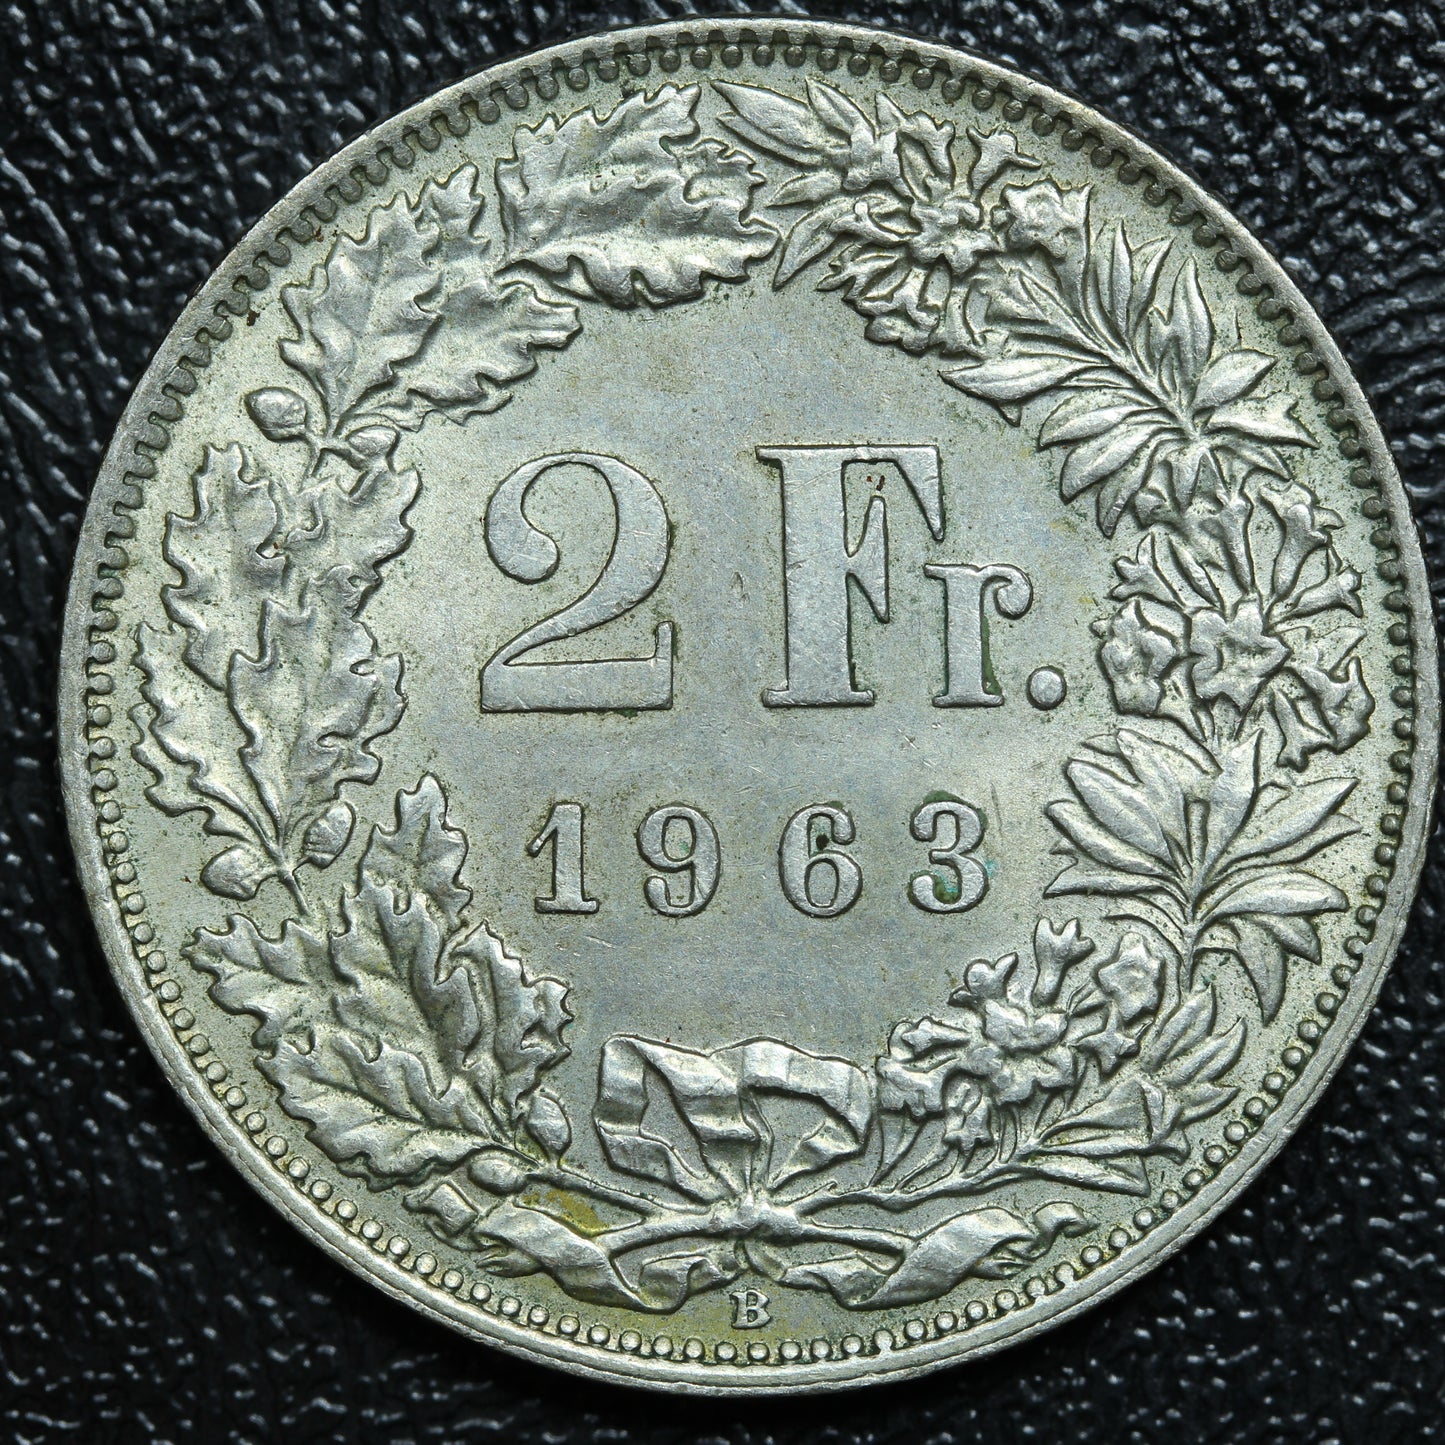 1963 B Switzerland 2 FRANC Silver KM#21